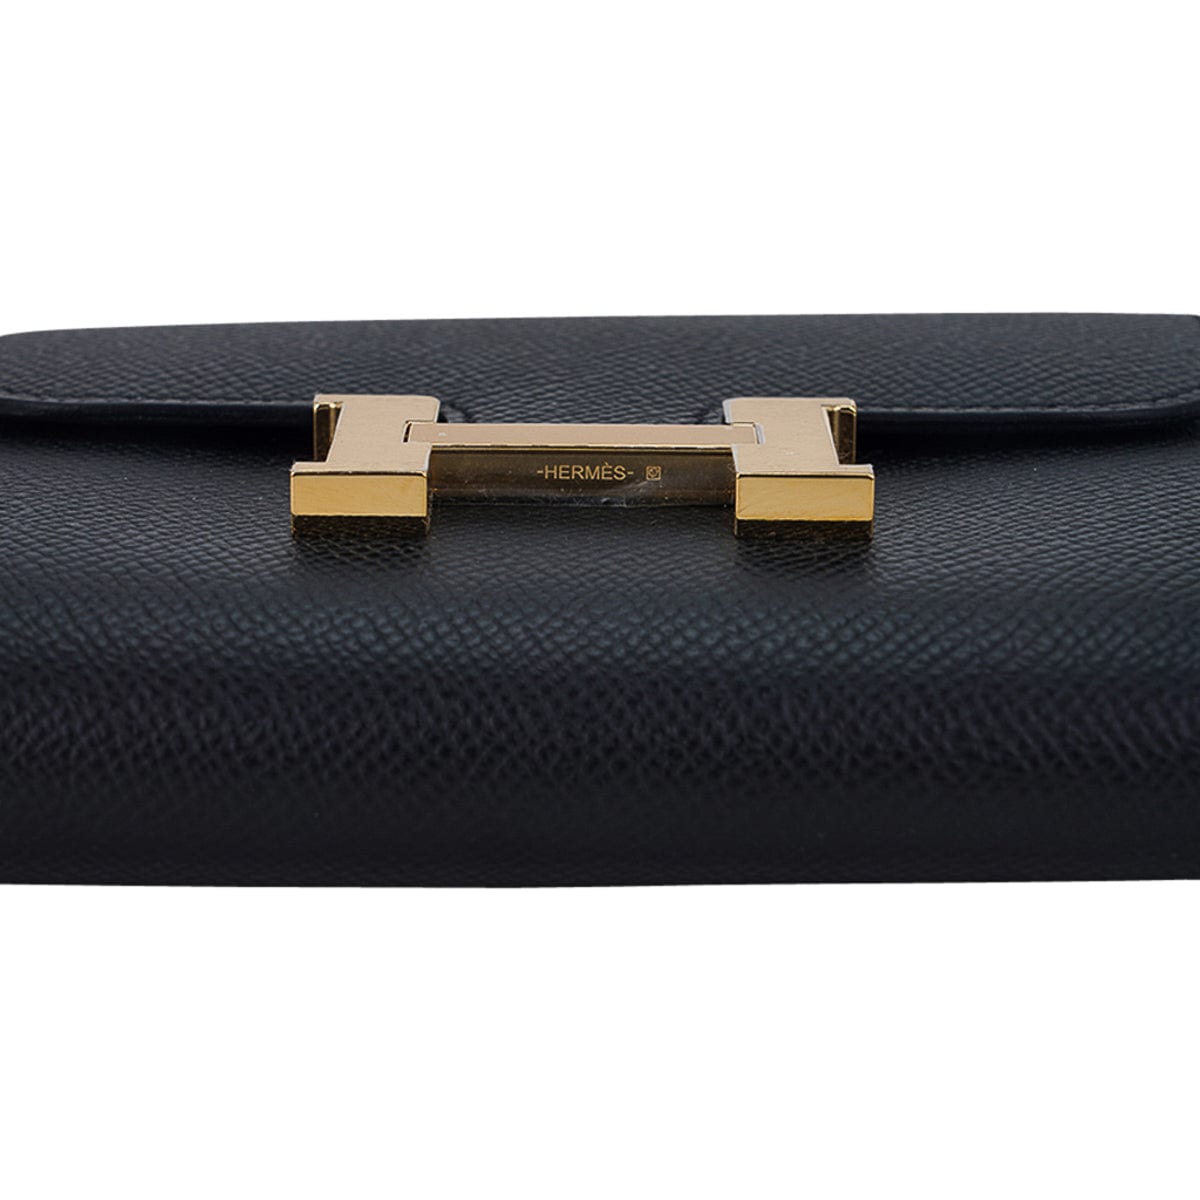 Hermès Constance Compact Wallet - Designer WishBags